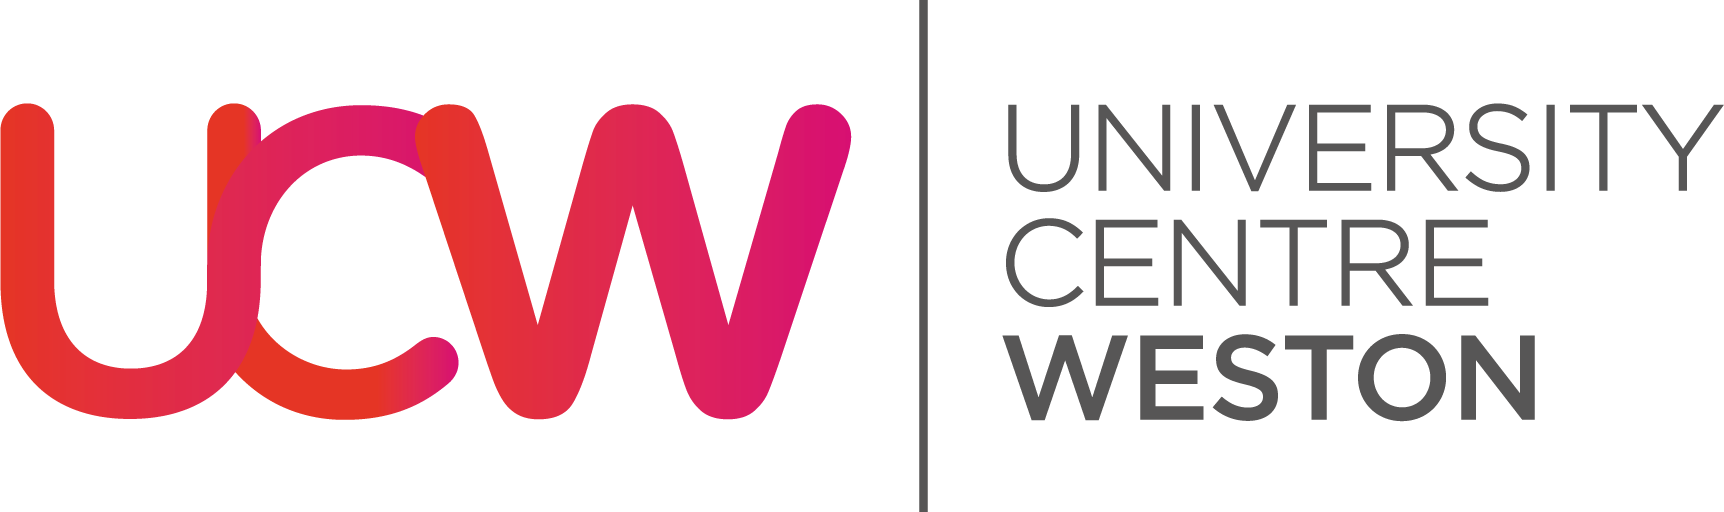 University centre weston Logo